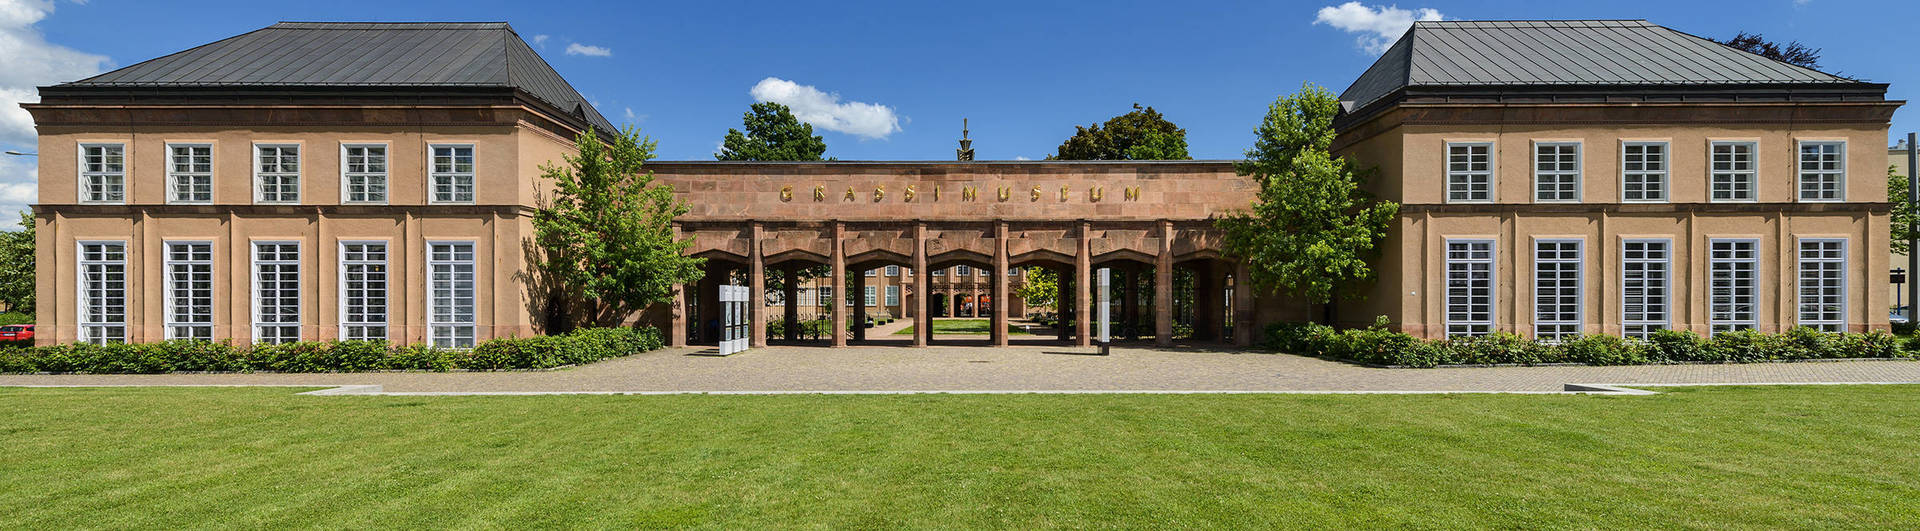 Grassimuseum Leipzig - H2 Hotel Leipzig - Offizielle Webseite